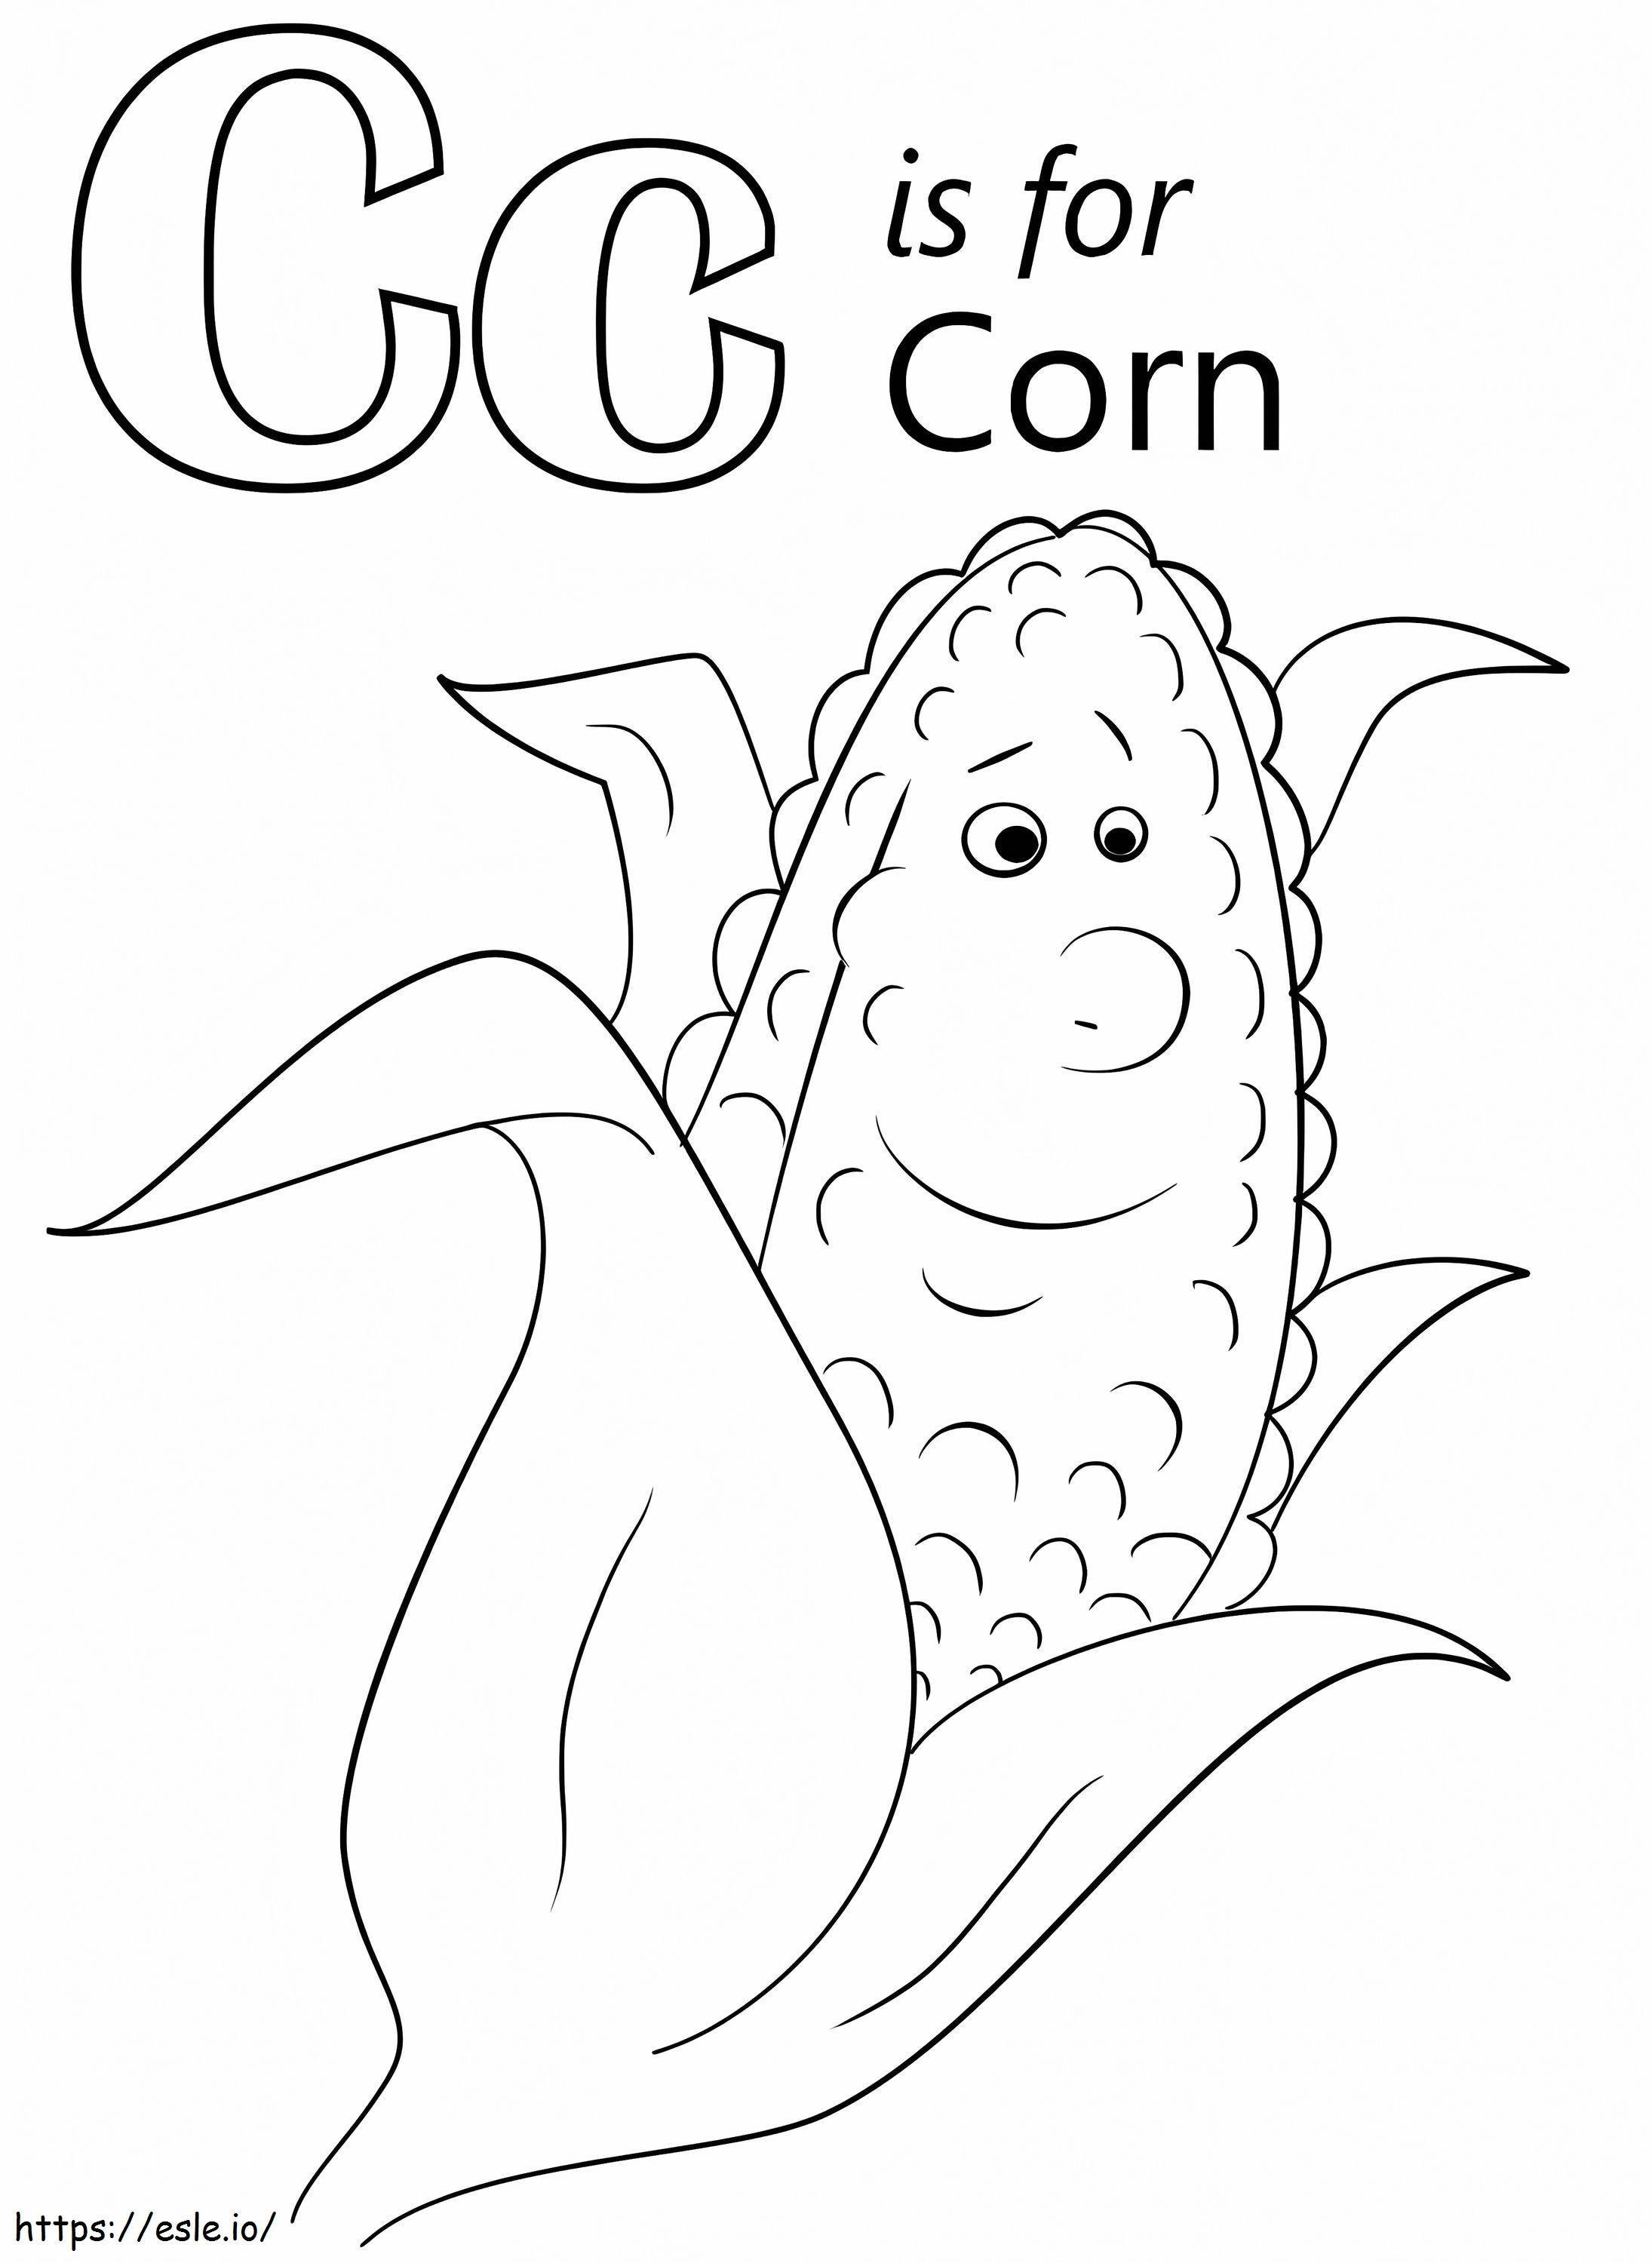 Corn Letter C coloring page